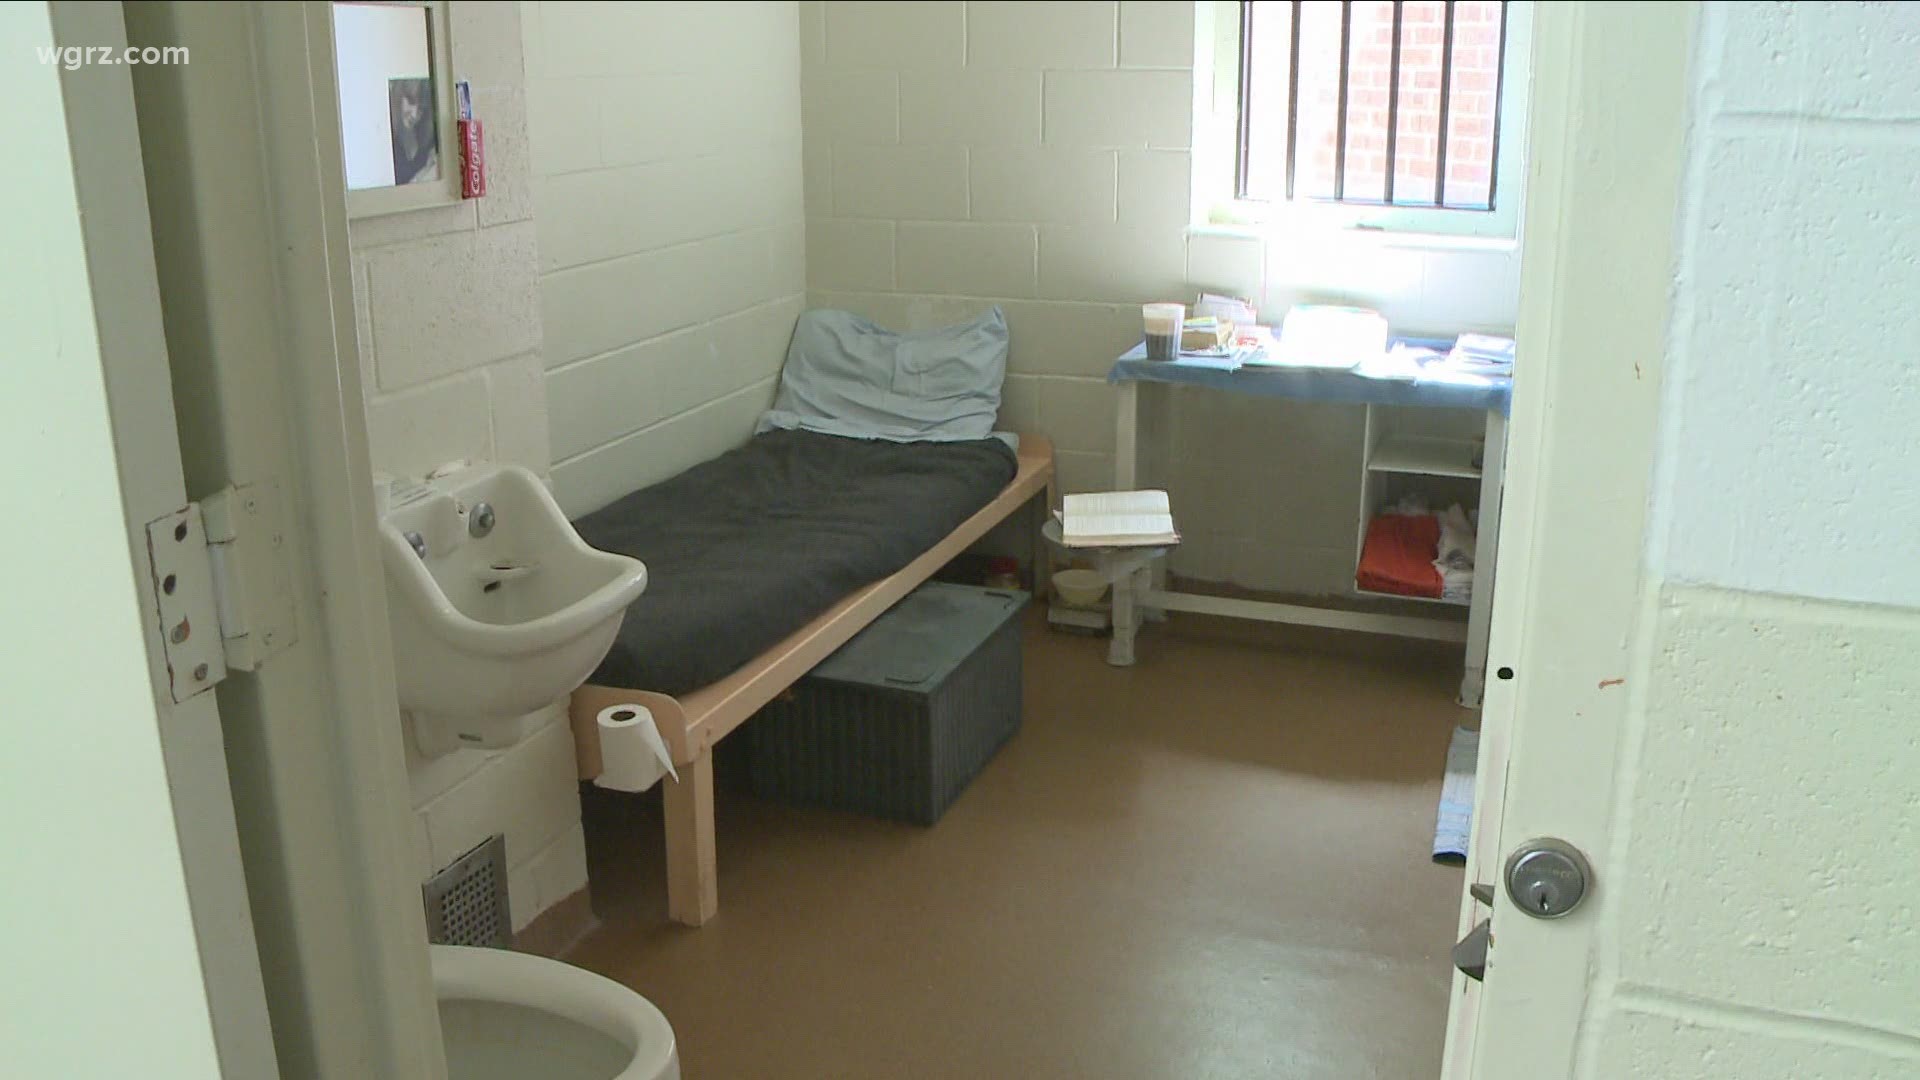 27 Cases At Alden Correctional Facility